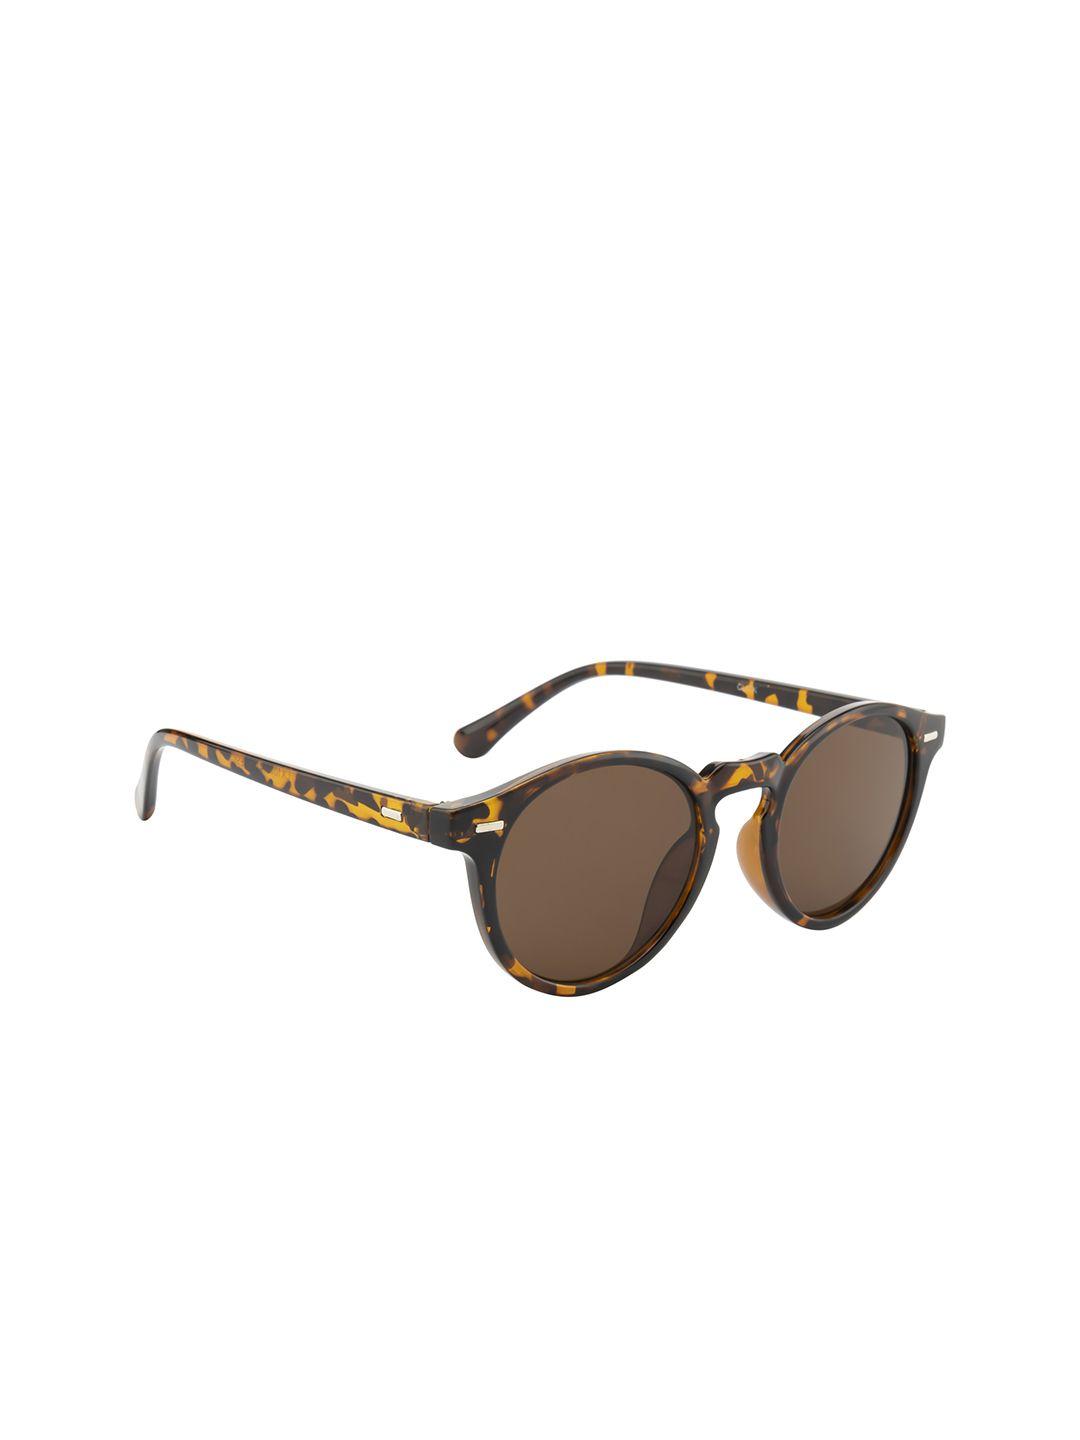 mast-&-harbour-full-rim-round-sunglasses-with-uv-protected-lens-mh-m25151